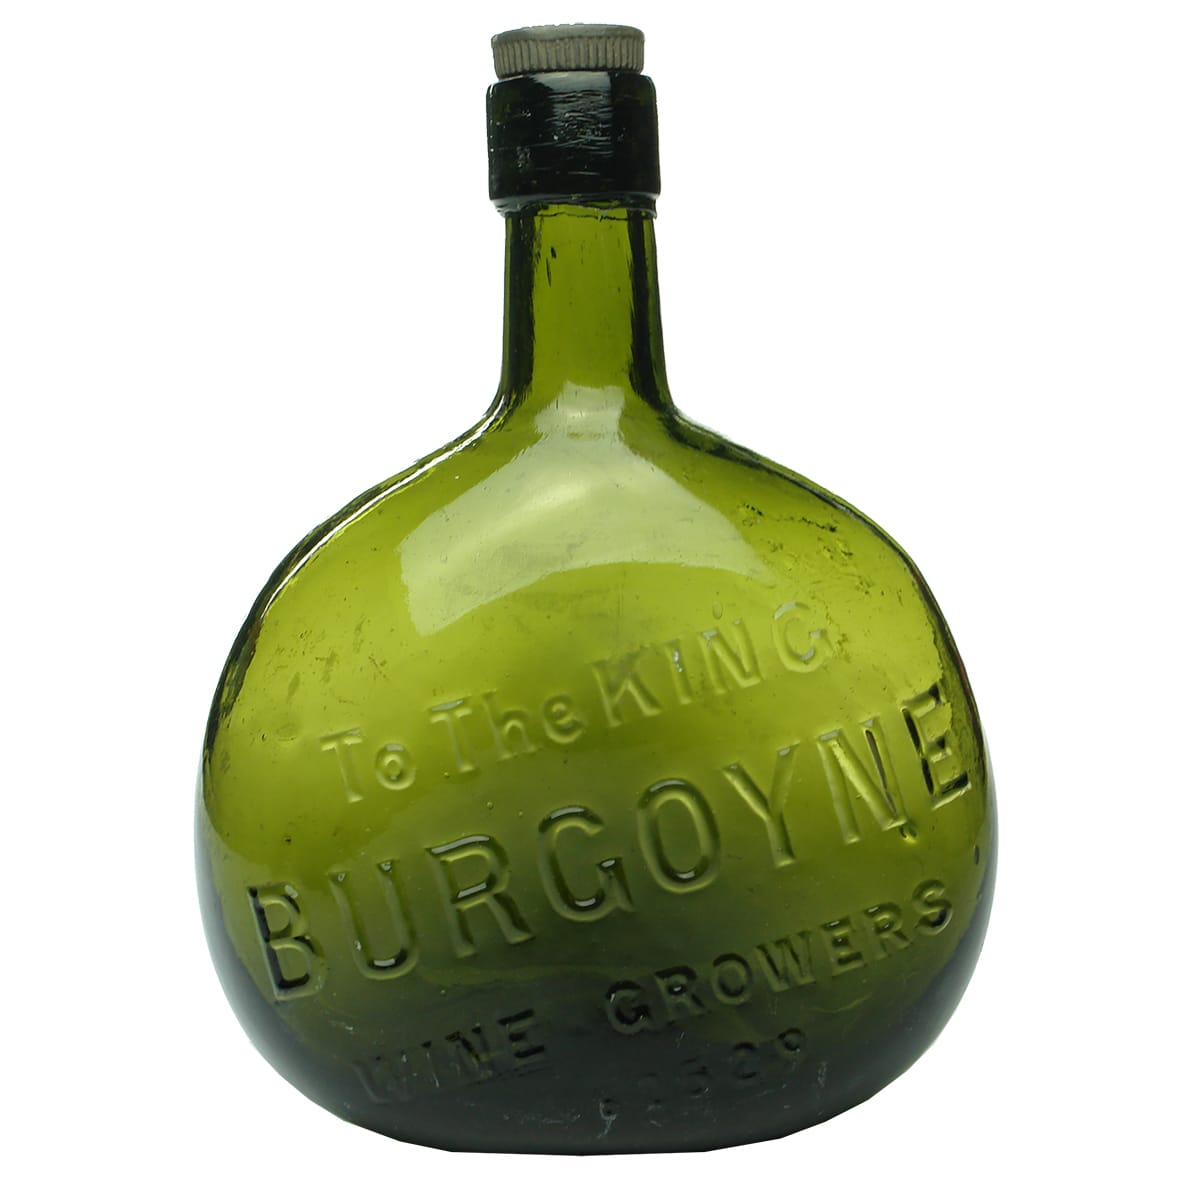 Wine. Burgoyne. Chestnut shape. Green.